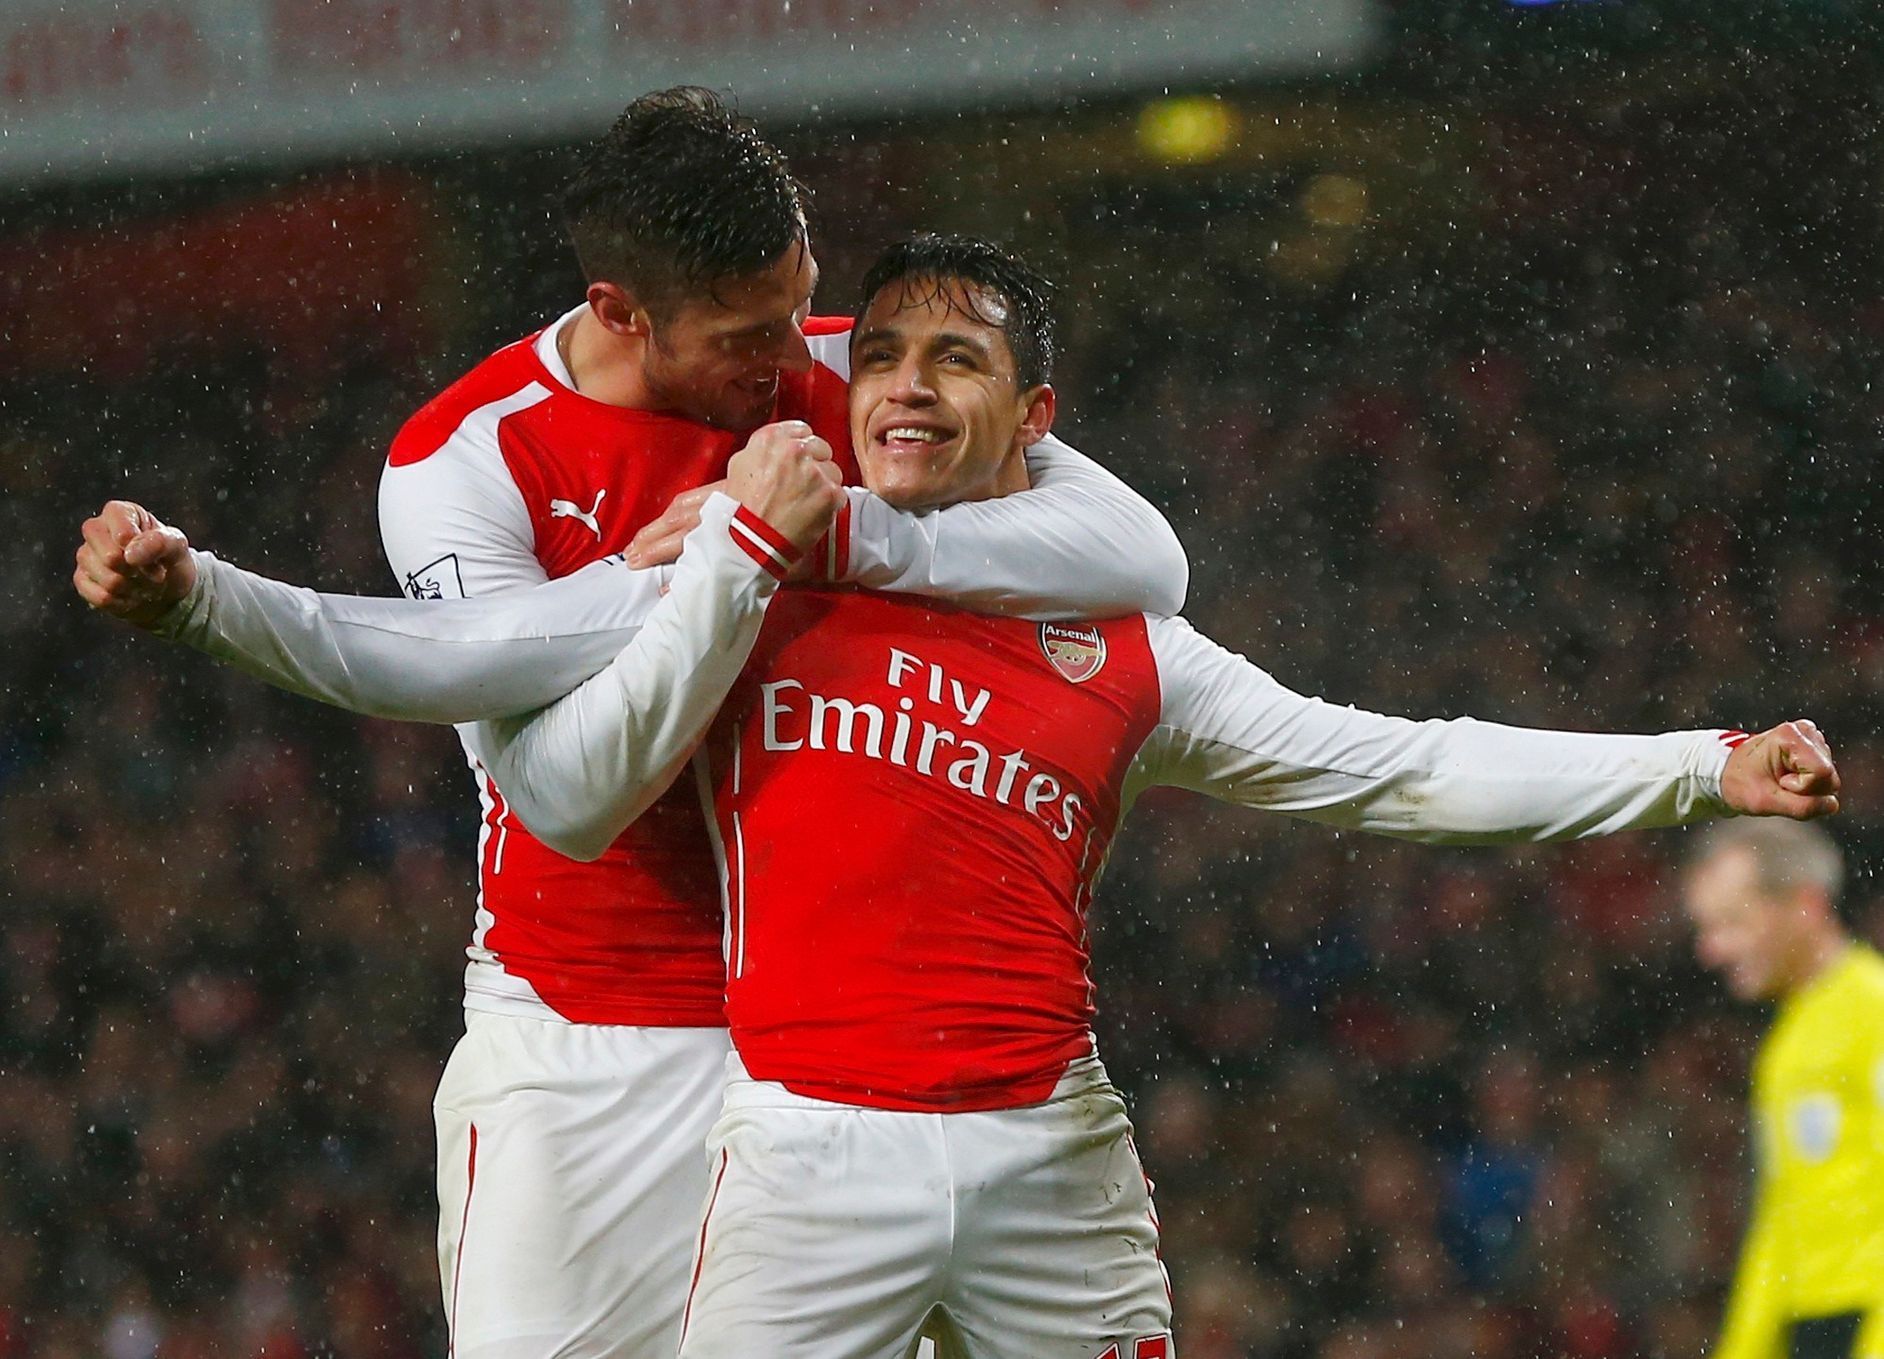 Premier League: Arsenal - QPR, gól, radost, Alexis Sánchez, Olivier Giroud